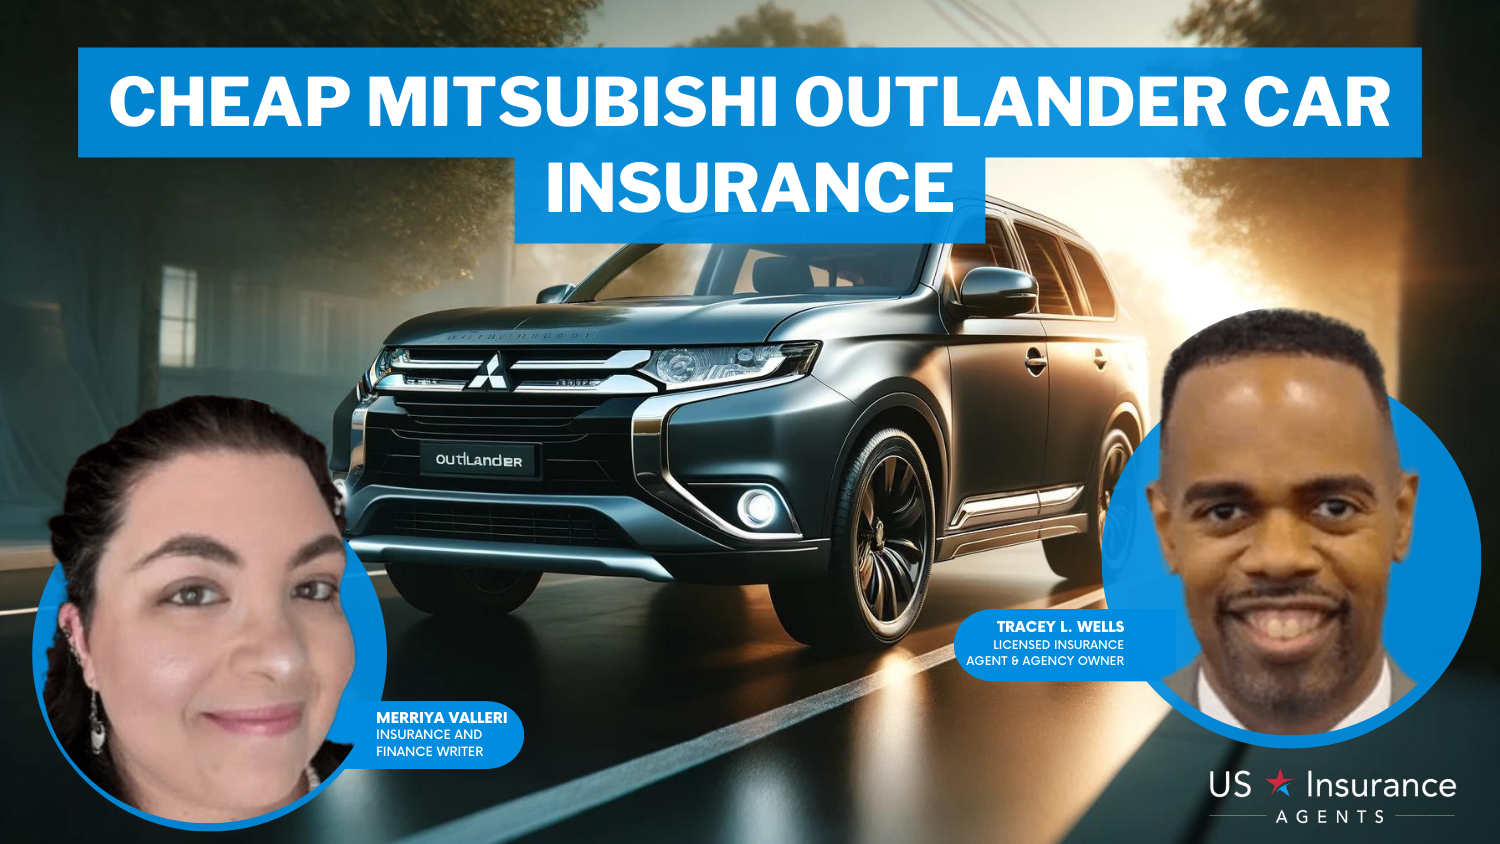 Cheap Mitsubishi Outlander Car Insurance: State Farm, USAA, and Progressive